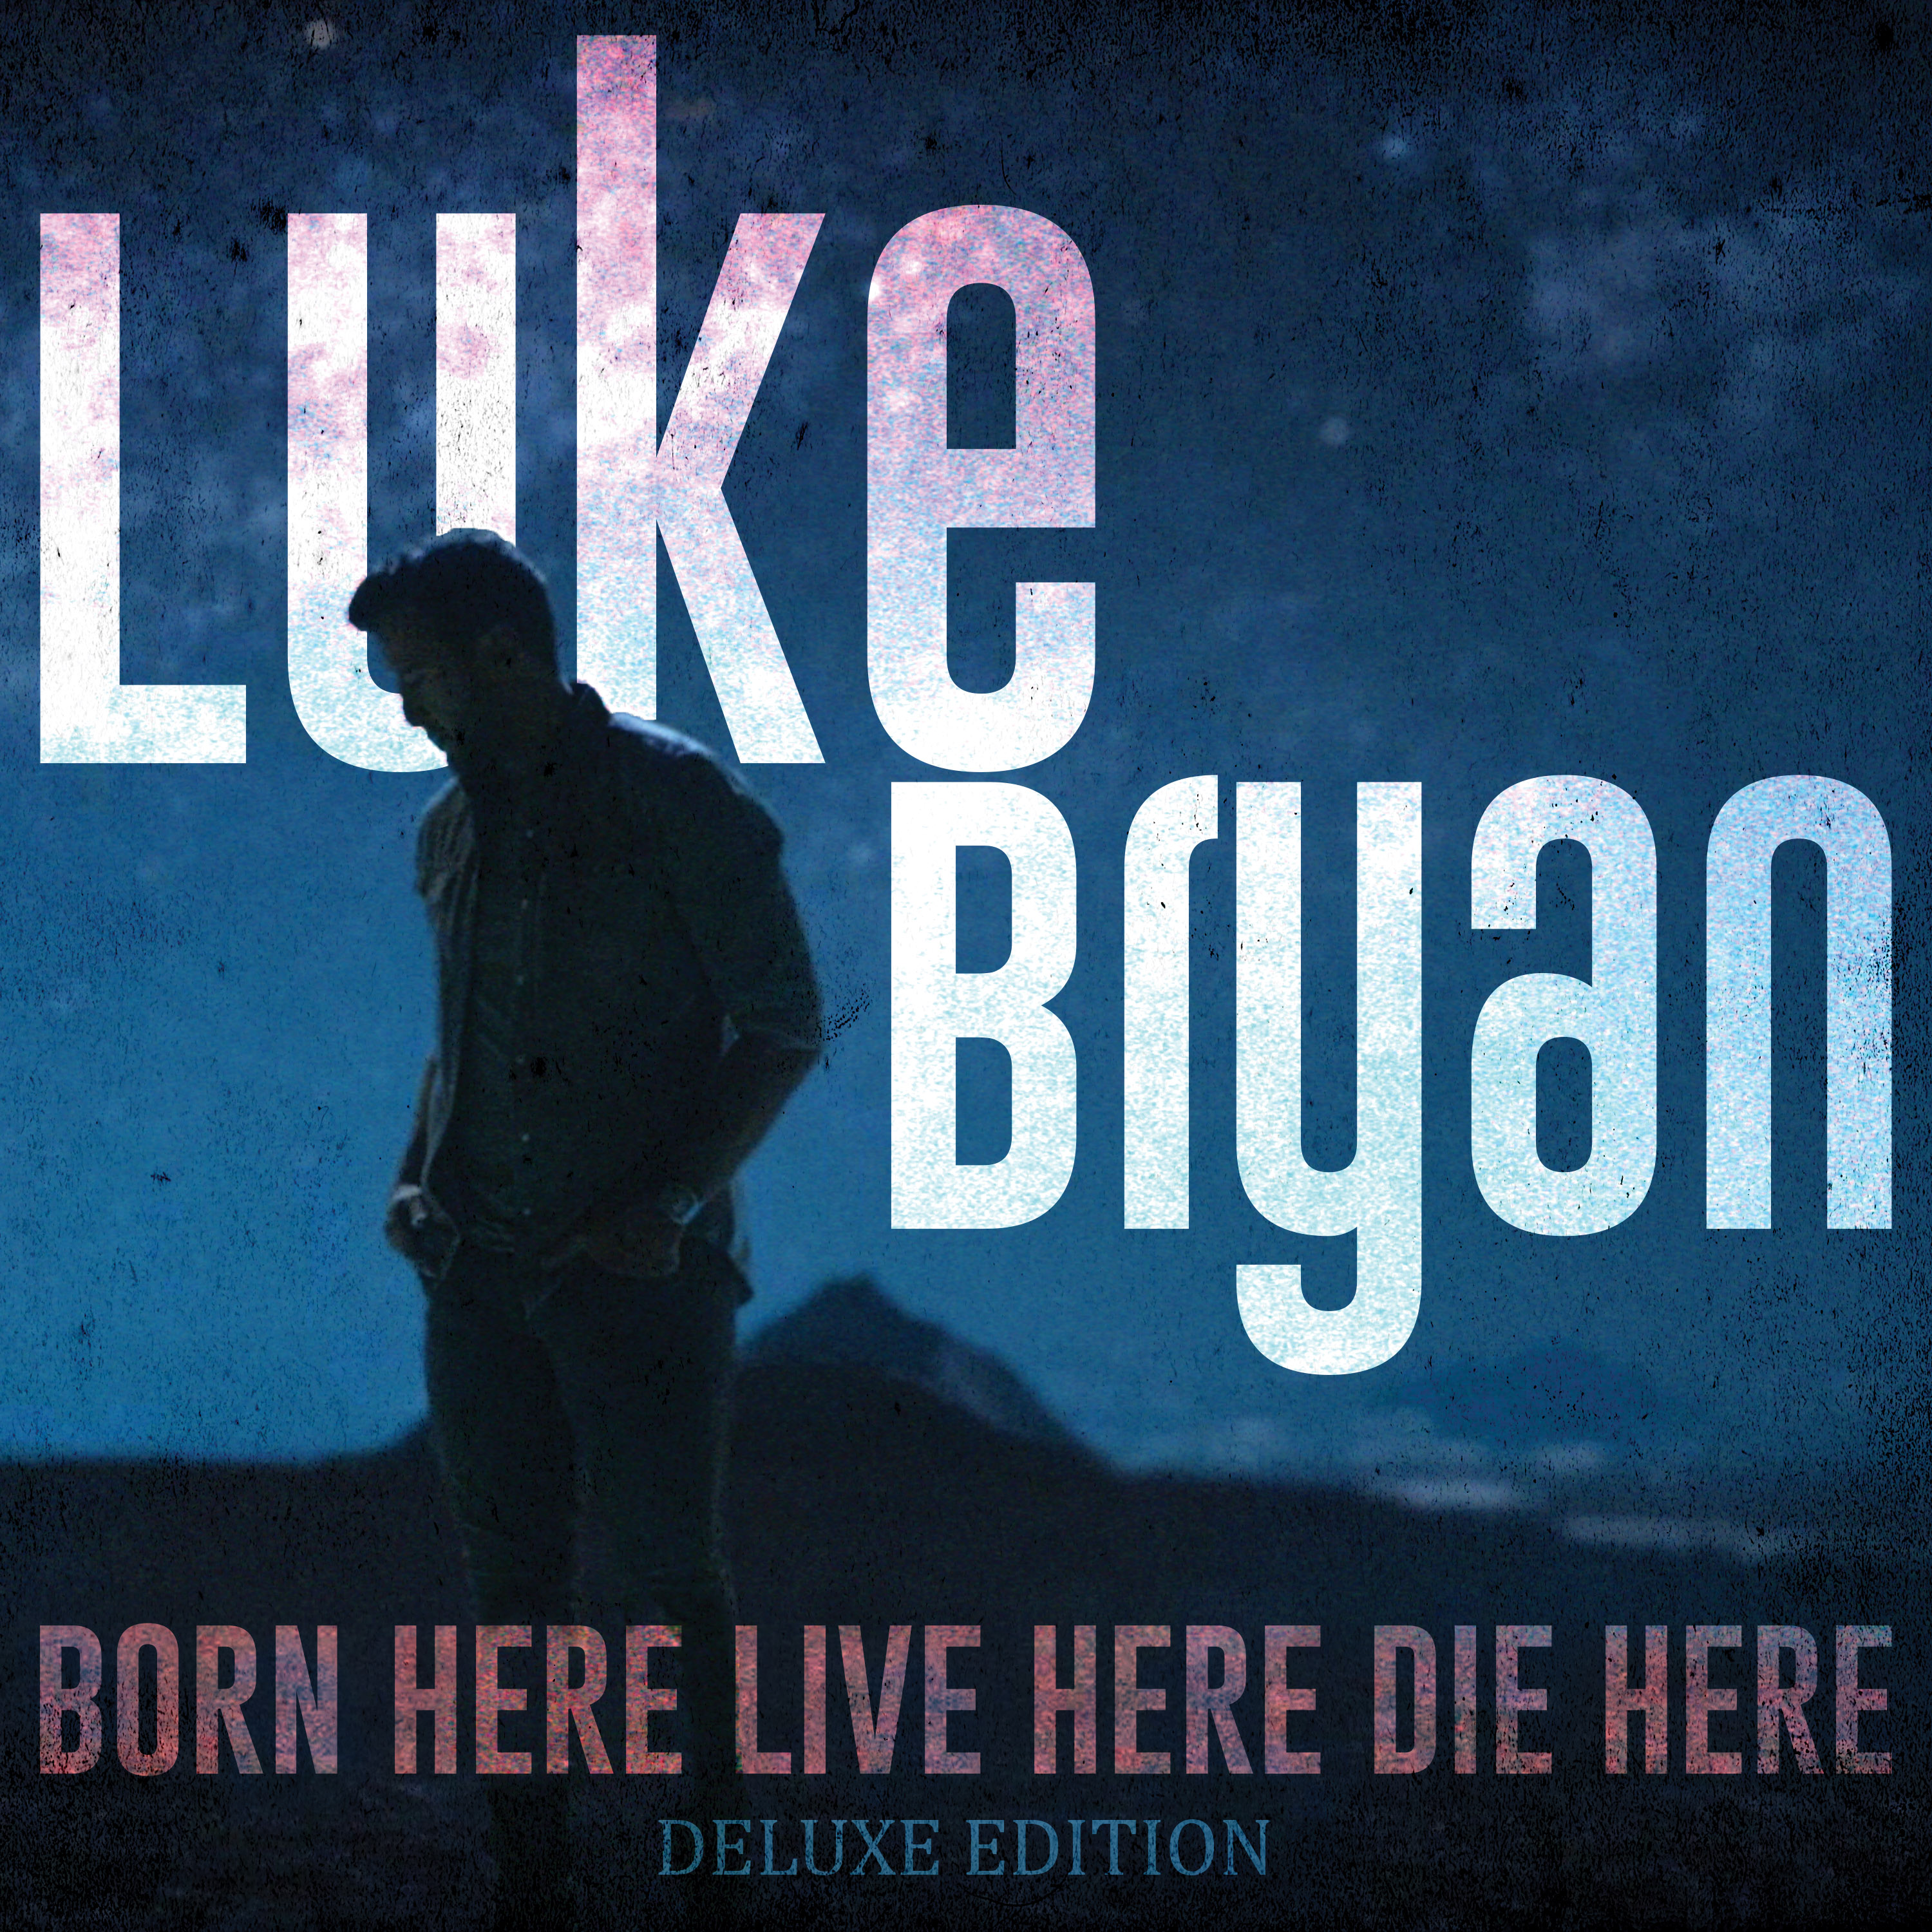 Luke Bryan Up cover artwork